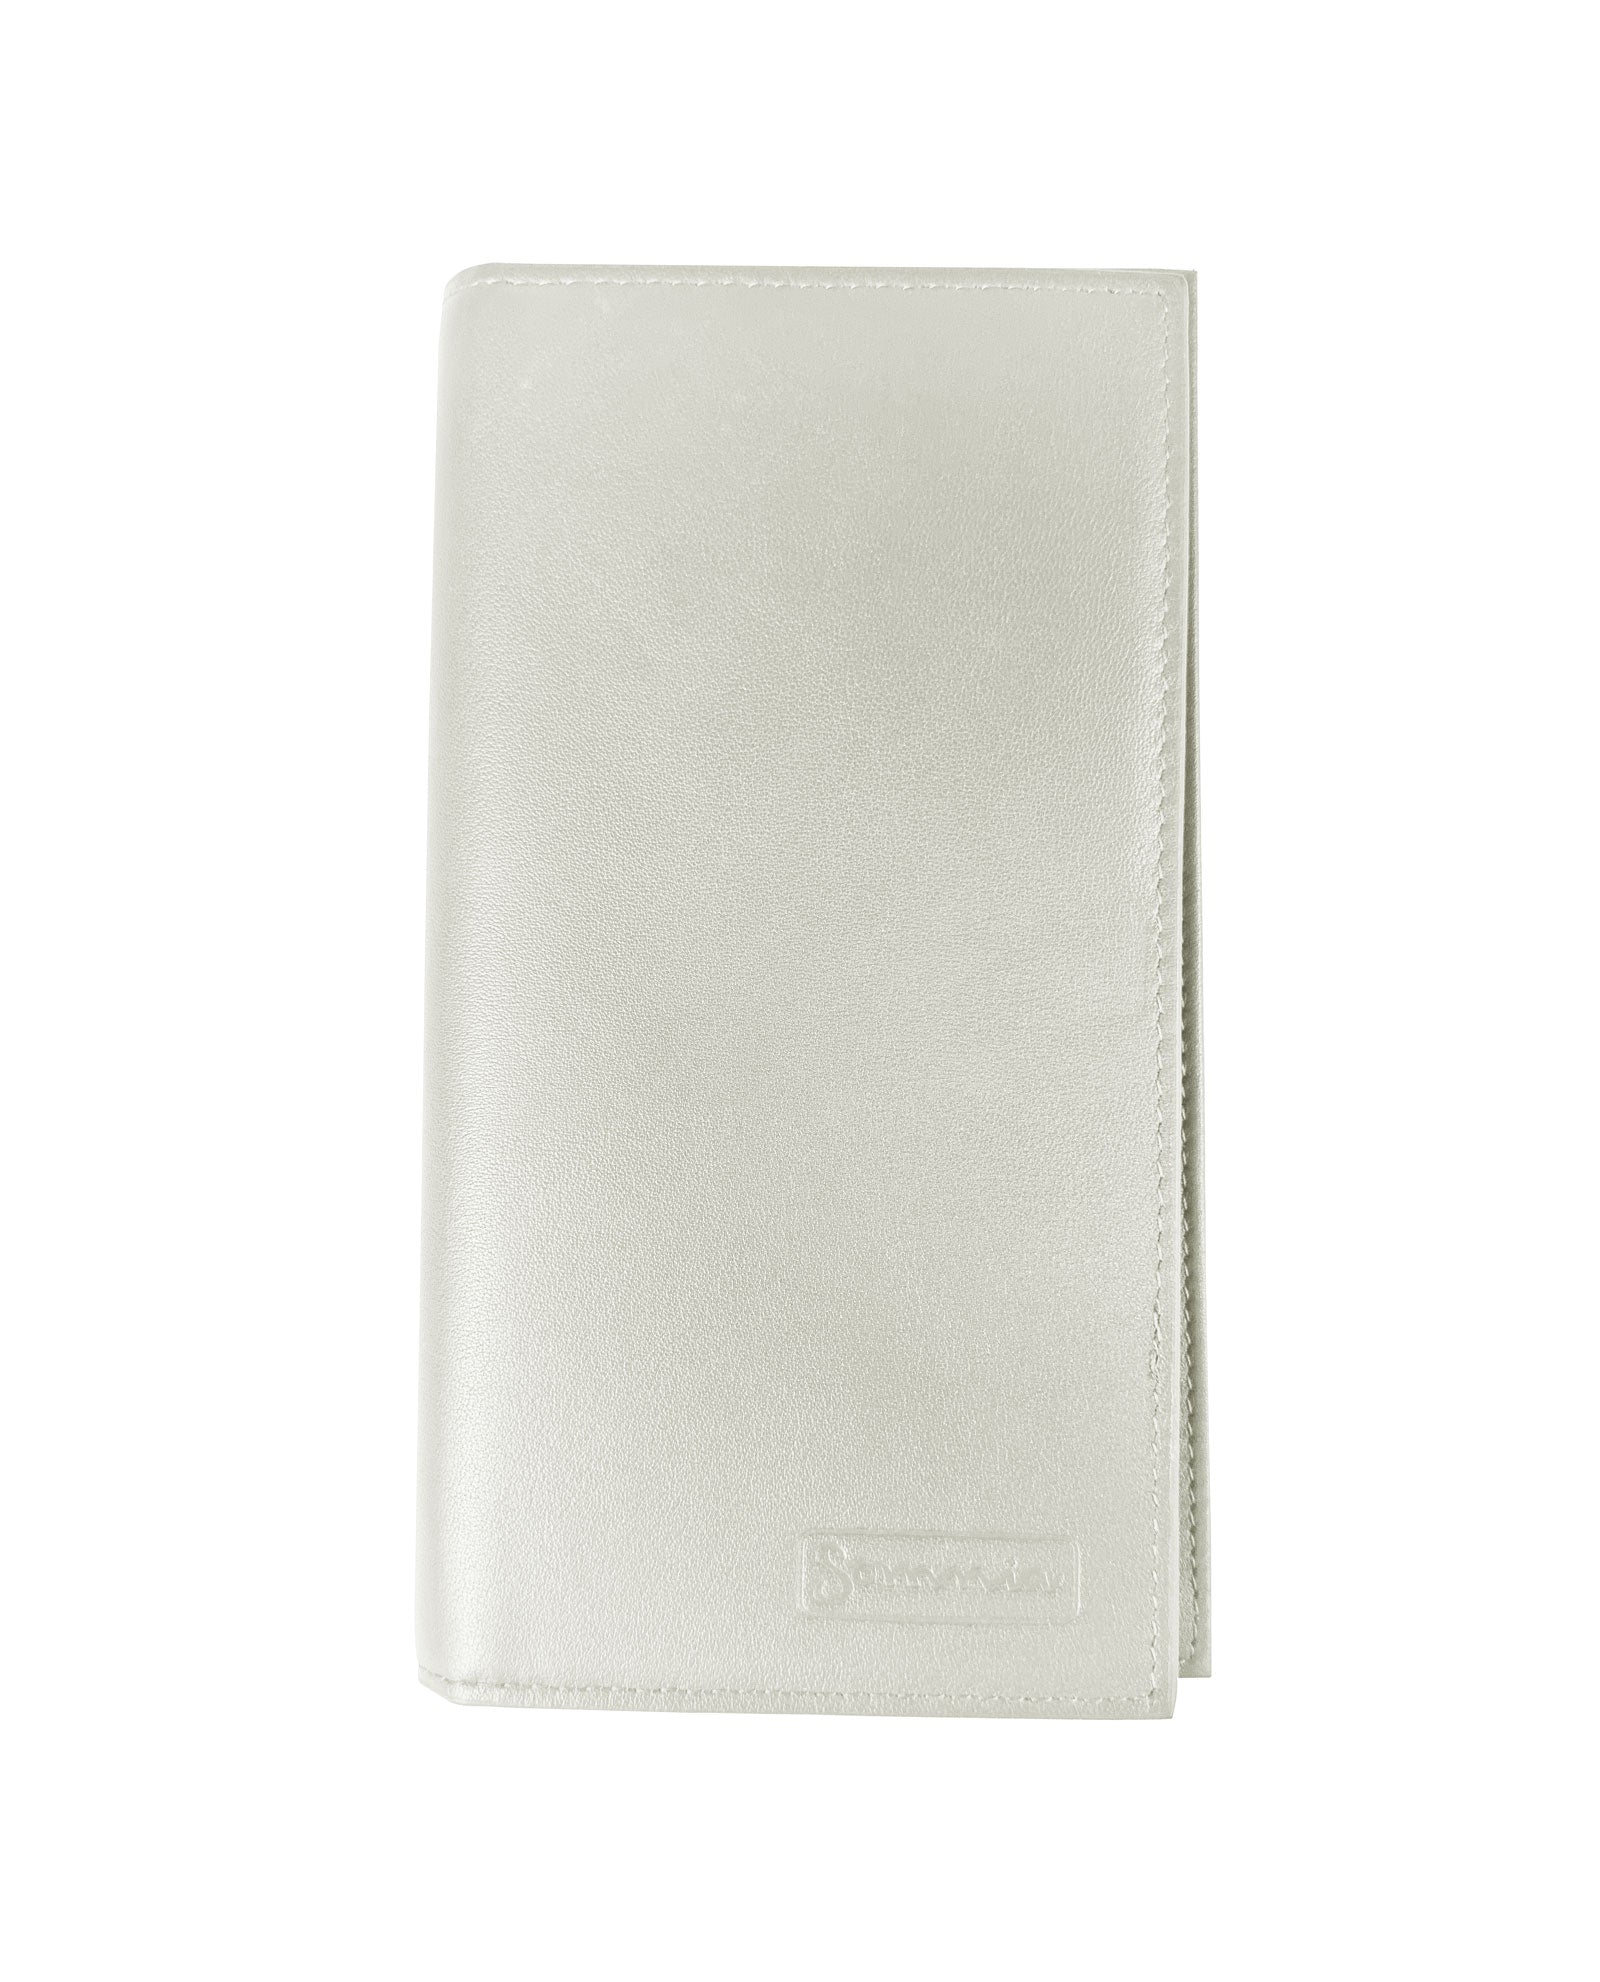 White Wallet - Large